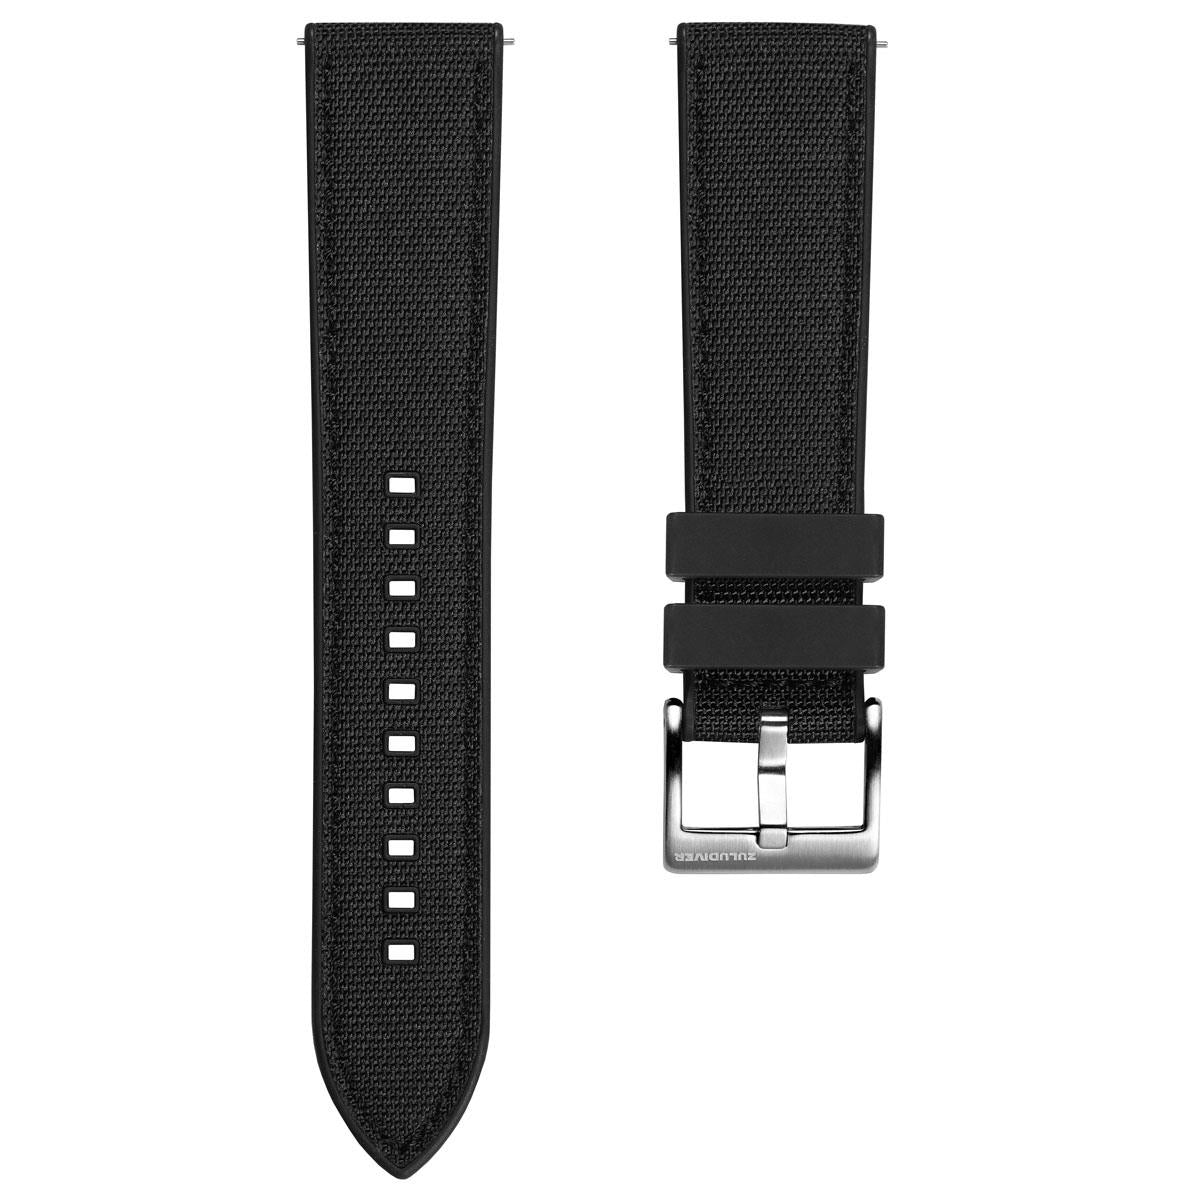 Endurance Extreme Rubber Watch Strap - Black